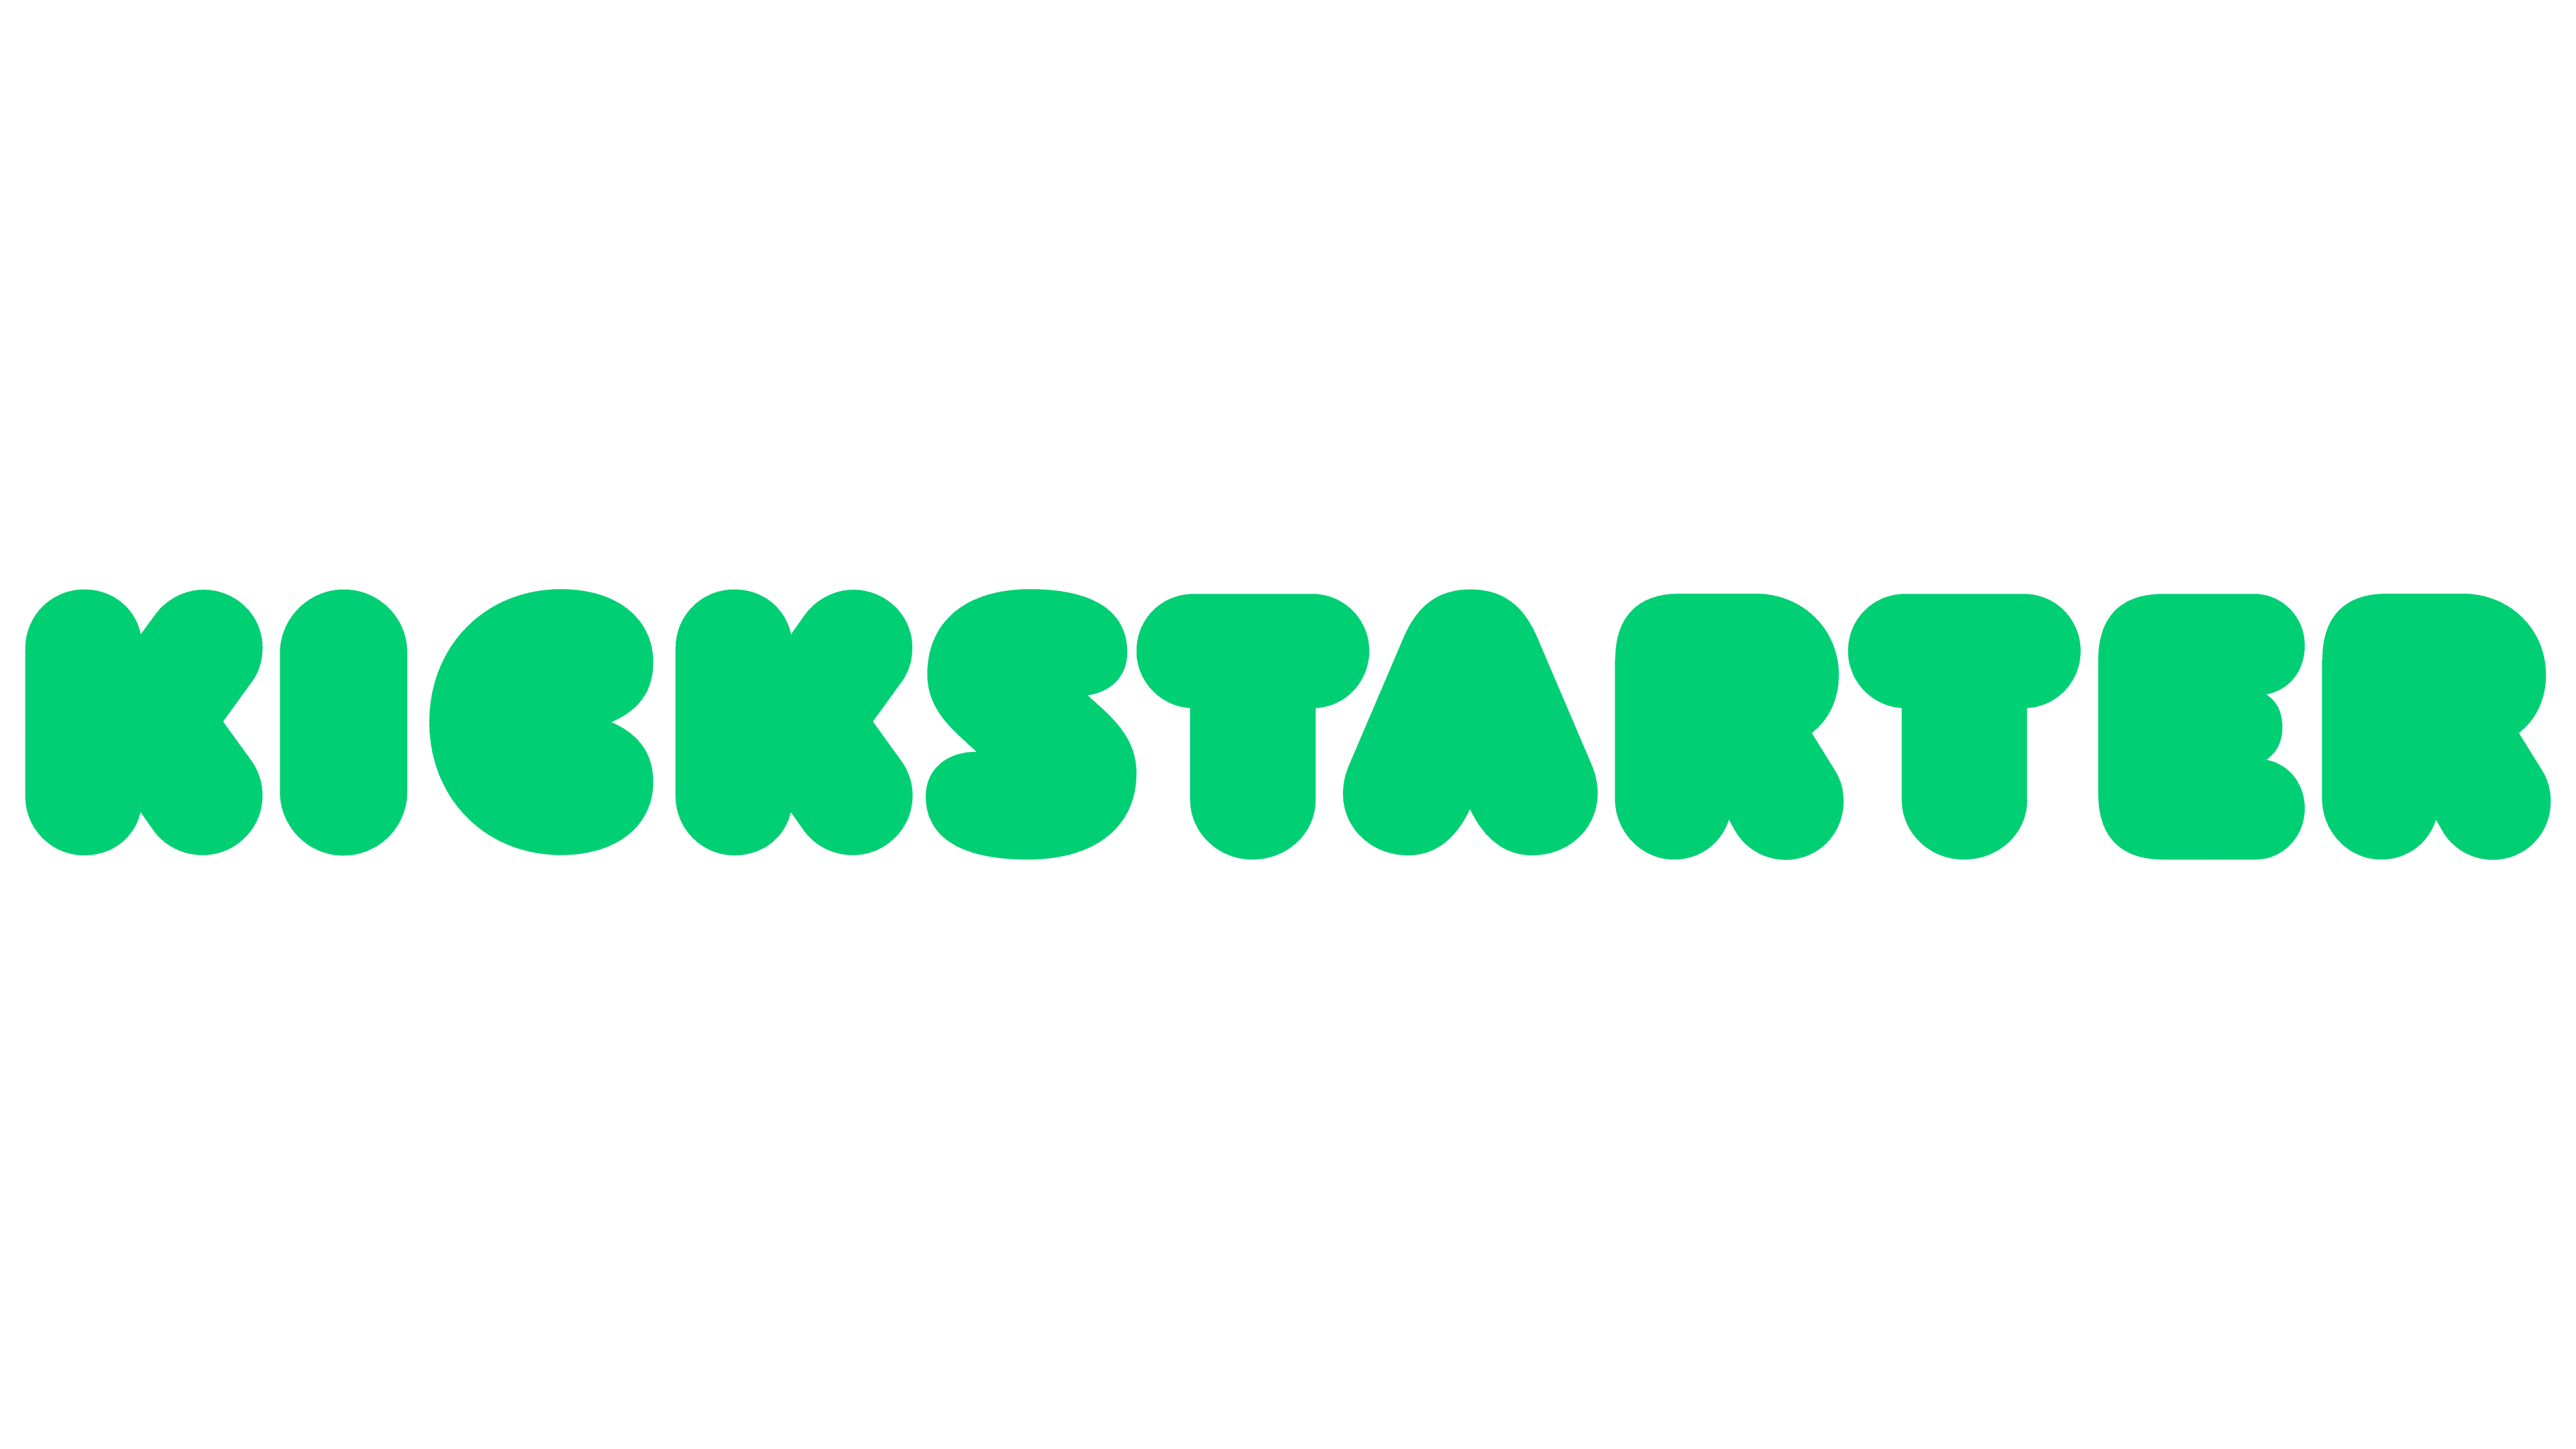 download pebble kickstarter